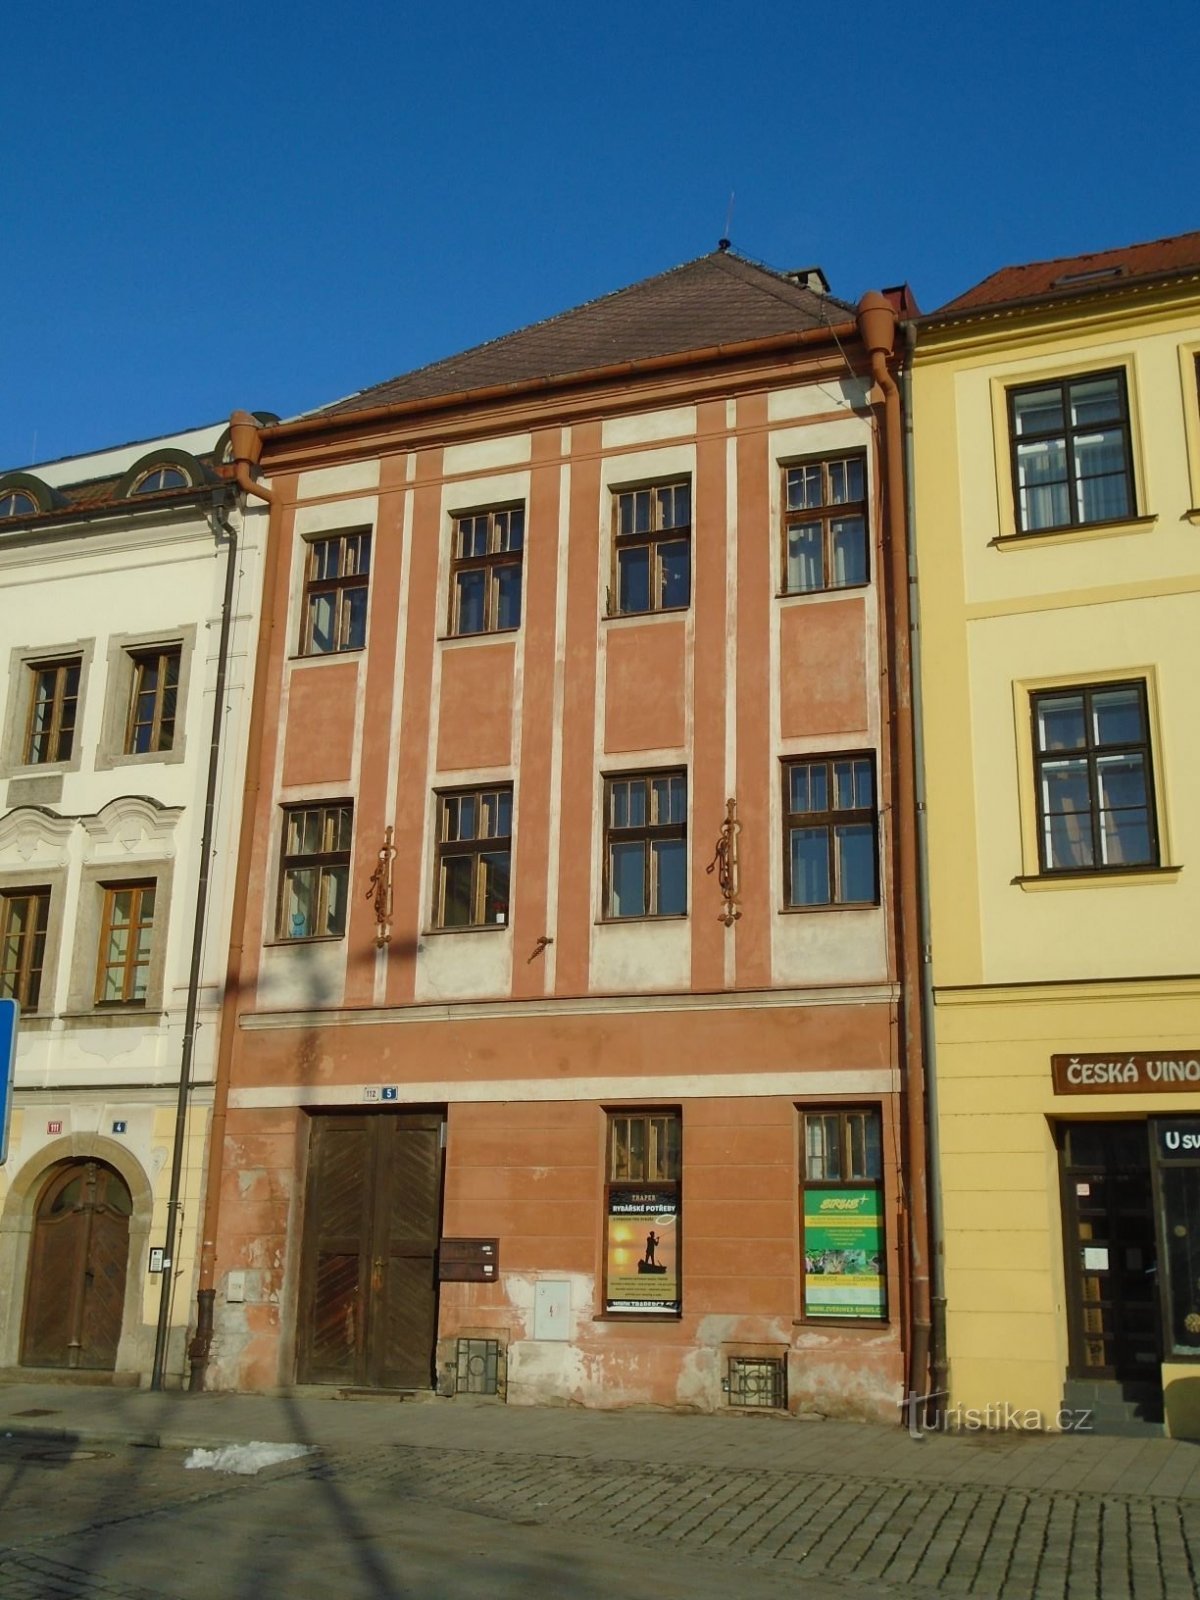 Malé náměstí số 112 (Hradec Králové, ngày 30.1.2019 tháng XNUMX năm XNUMX)